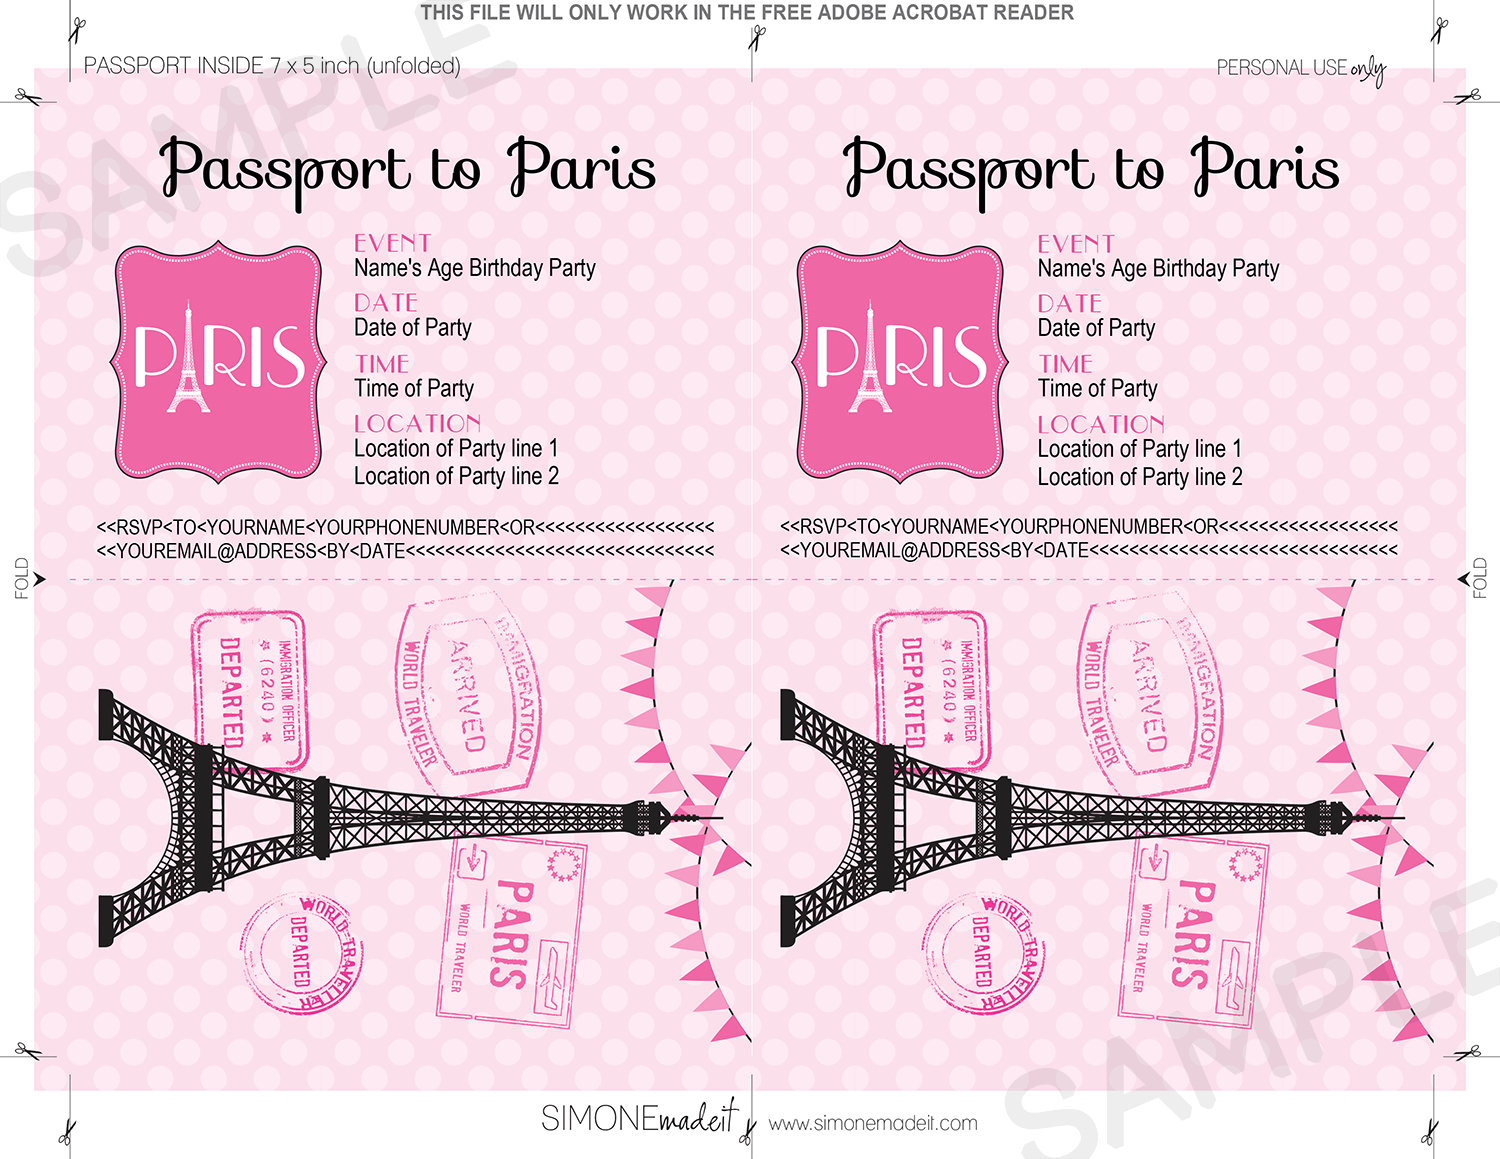 Paris Party Passport Invitations Template Pink Art Vulture inside dimensions 1500 X 1159